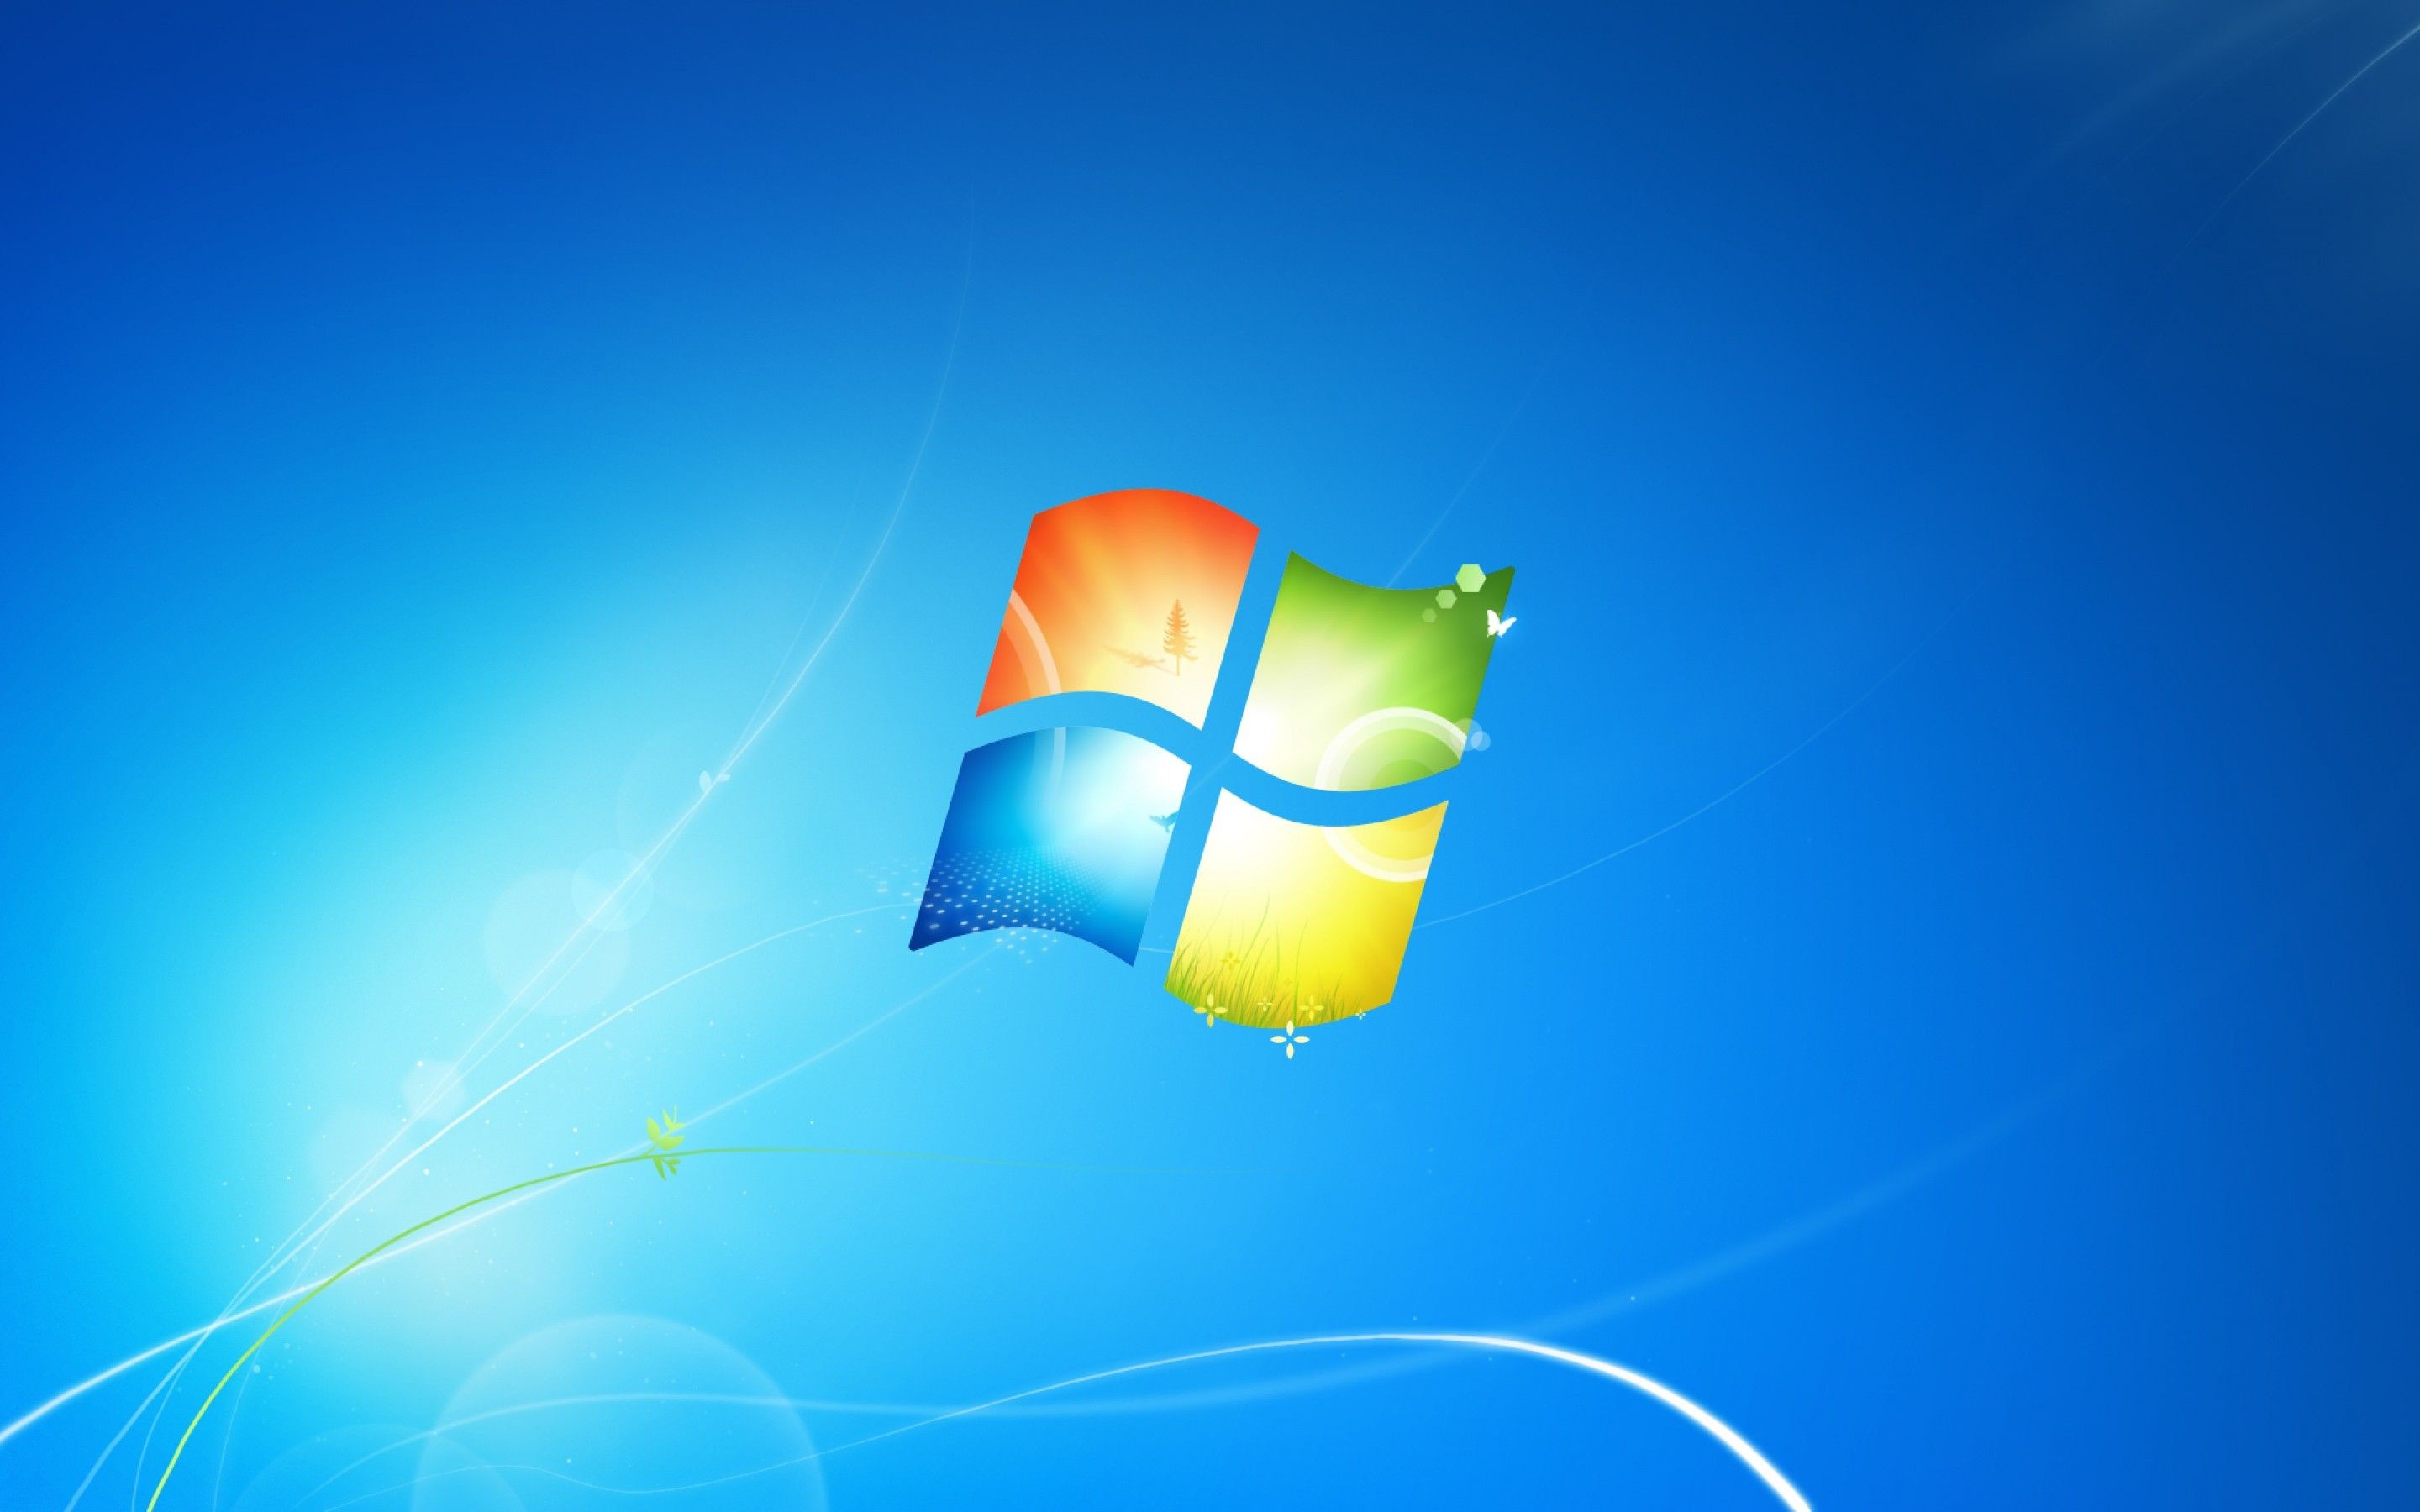 Microsoft Windows Desktop Backgrounds (65+ images)